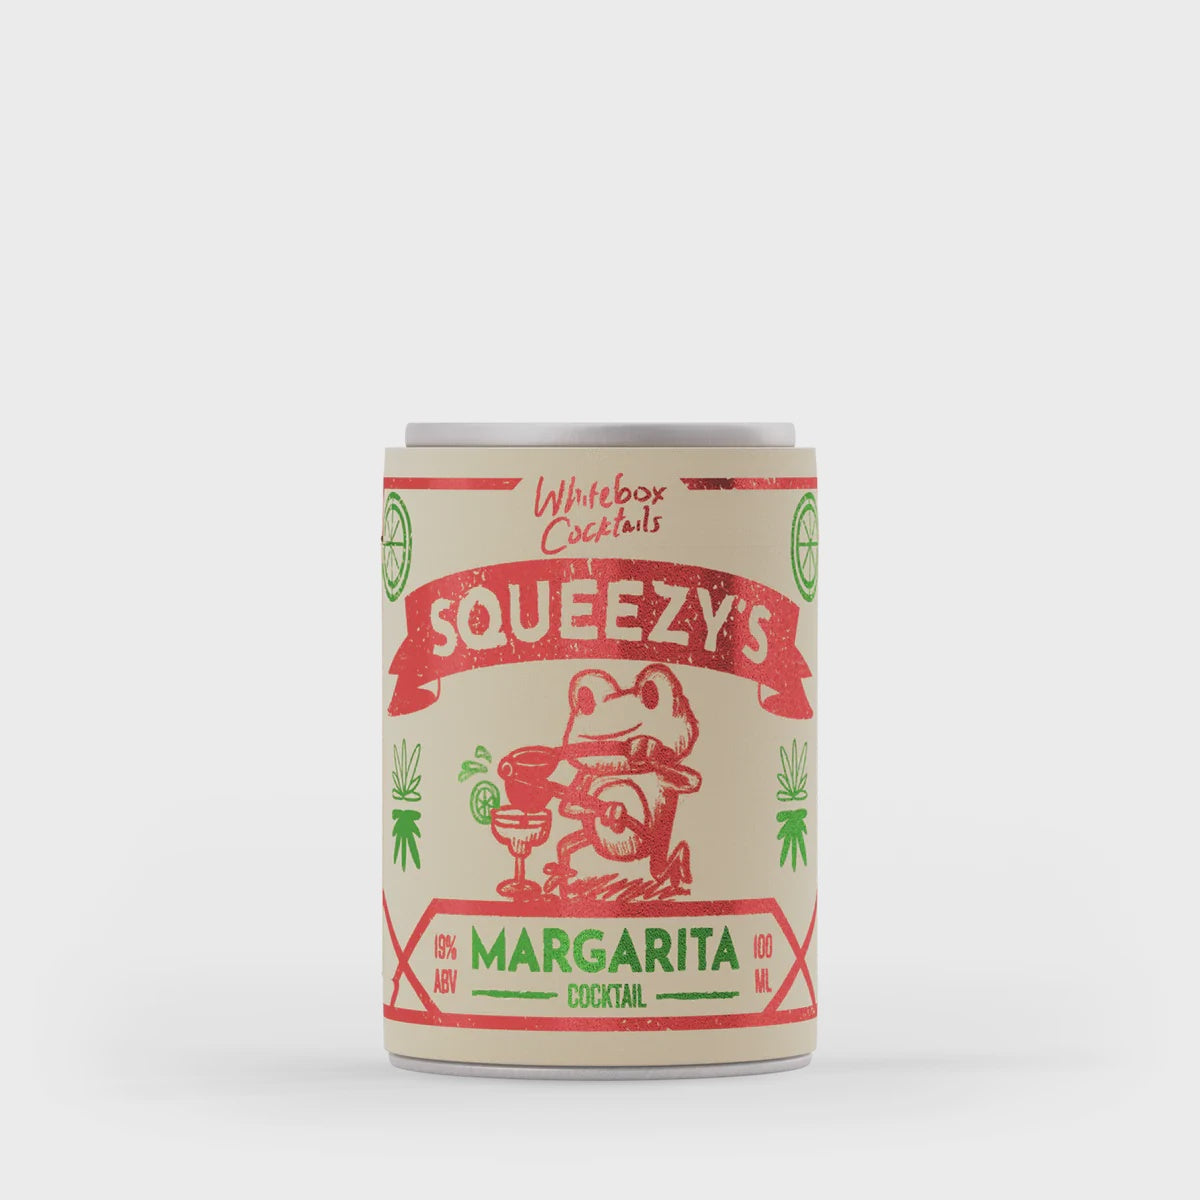 Whitebox Squeezy's Margarita   19% / 10cl